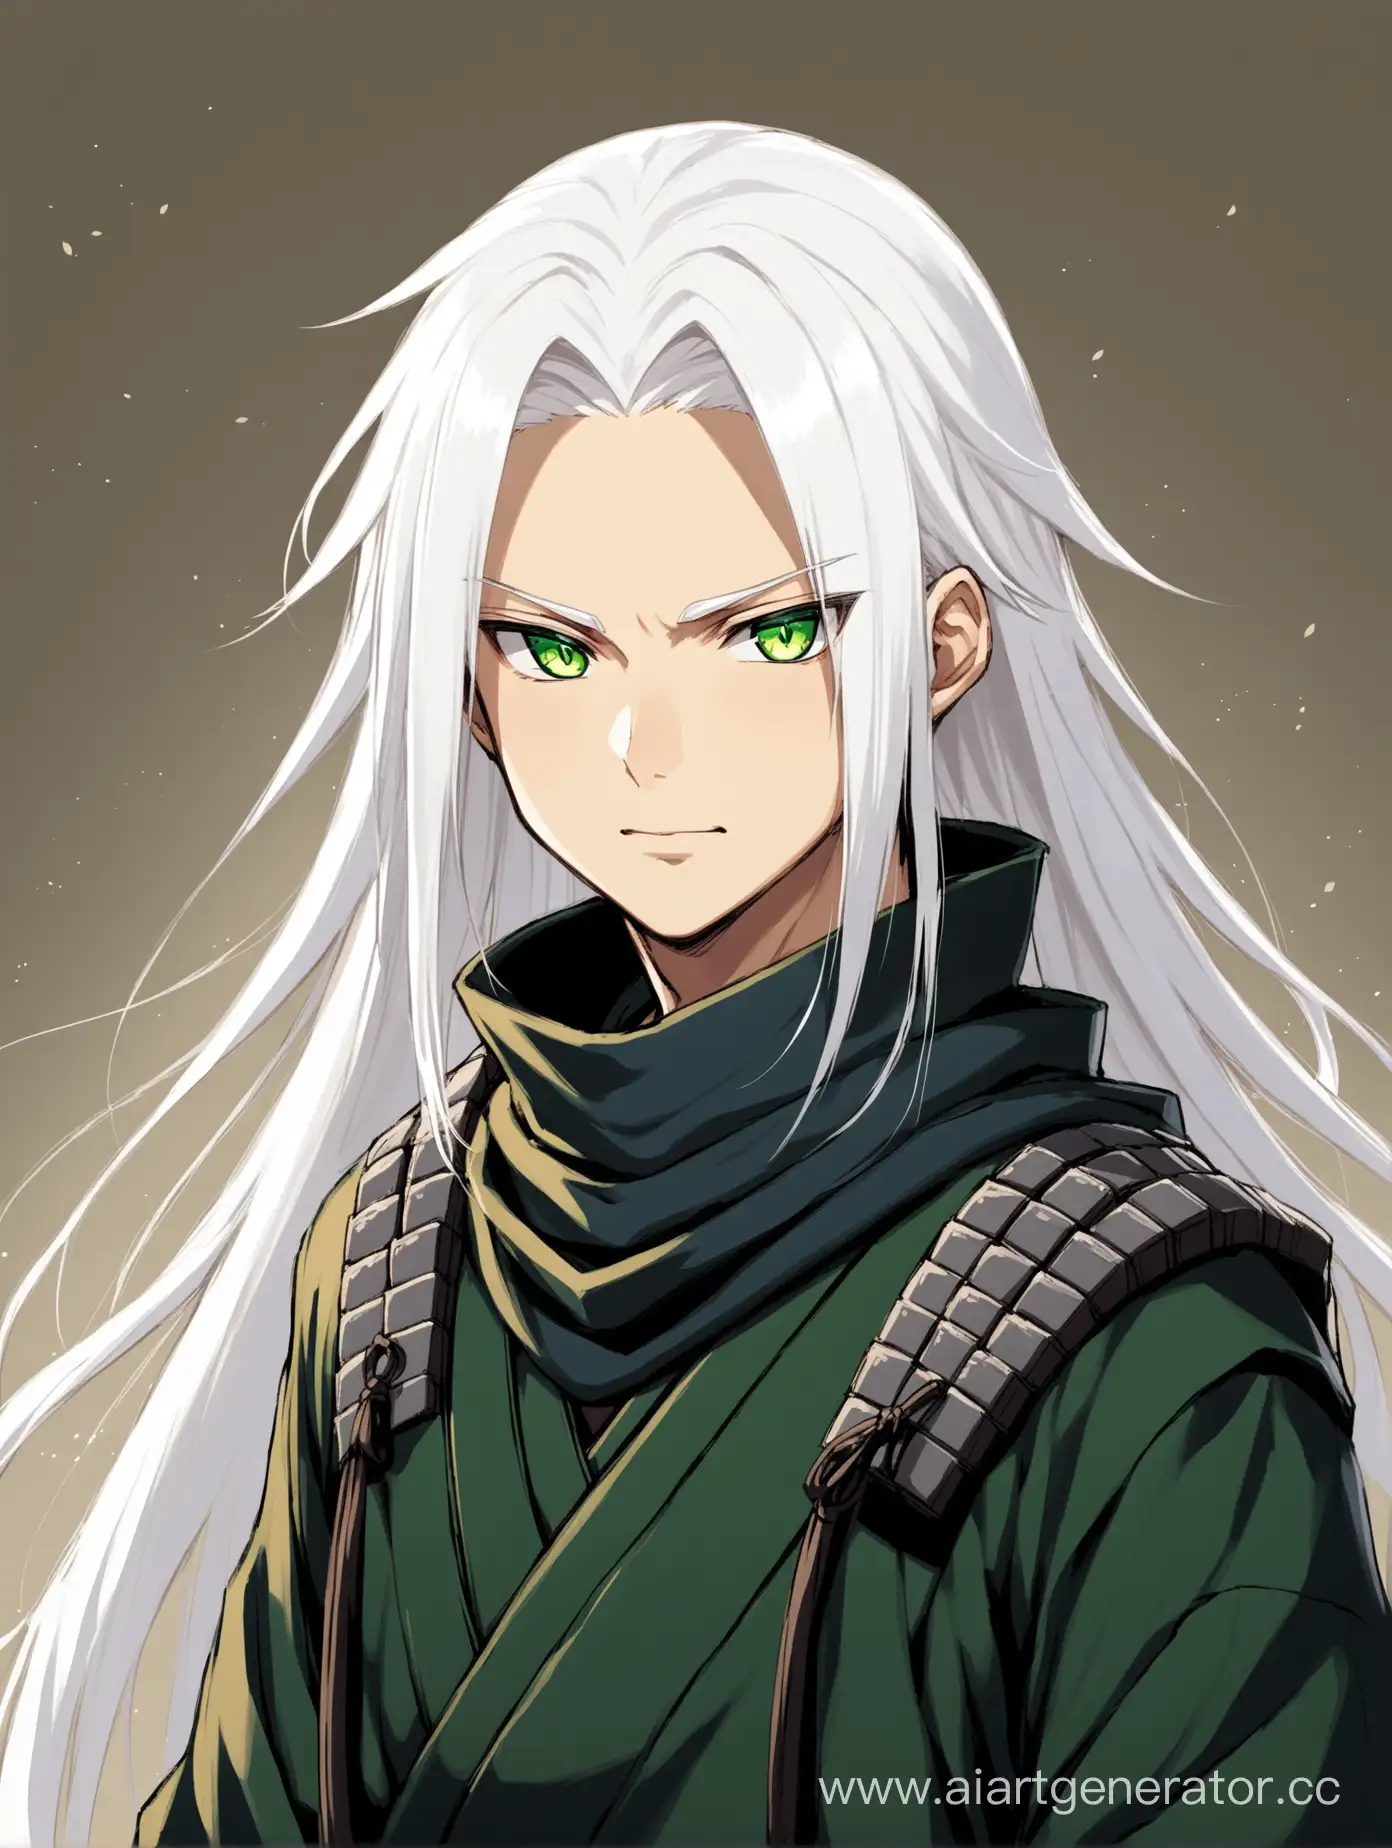 Shinobi-Boy-with-Long-White-Hair-Son-of-Kimimaro-Kaguya